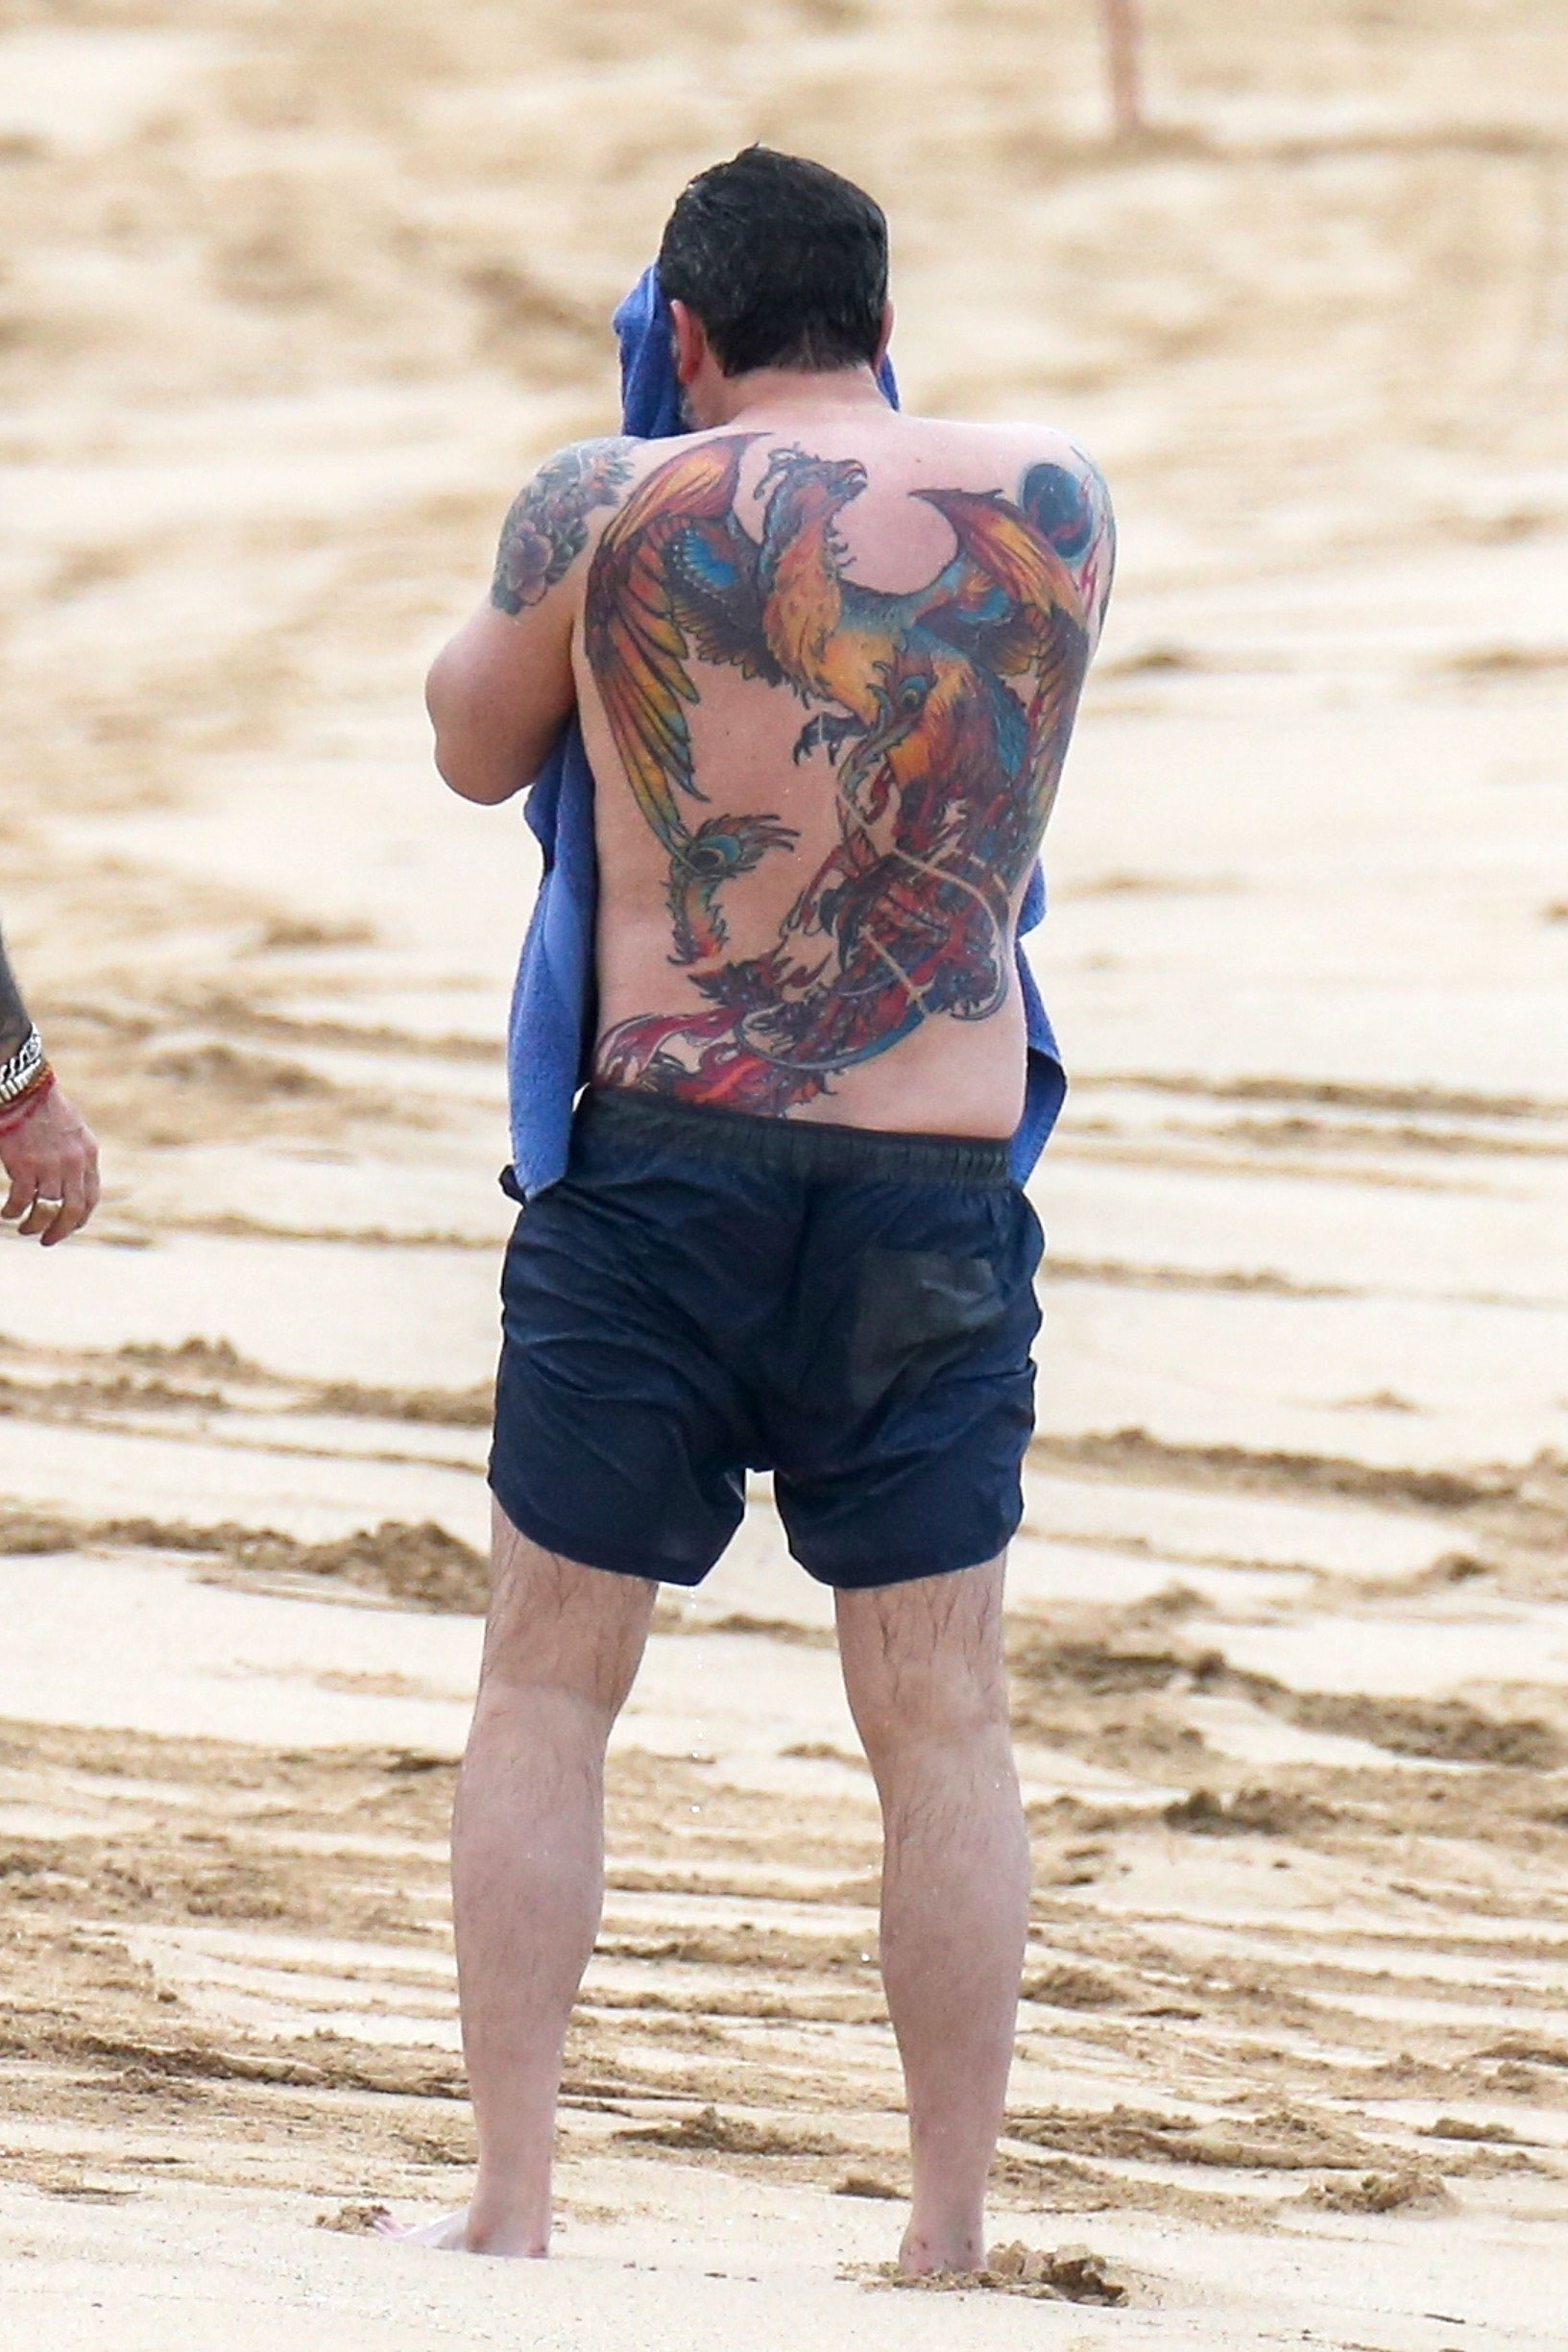 Ben Affleck Shows Off Massive Back Tattoo He Said Was Fake